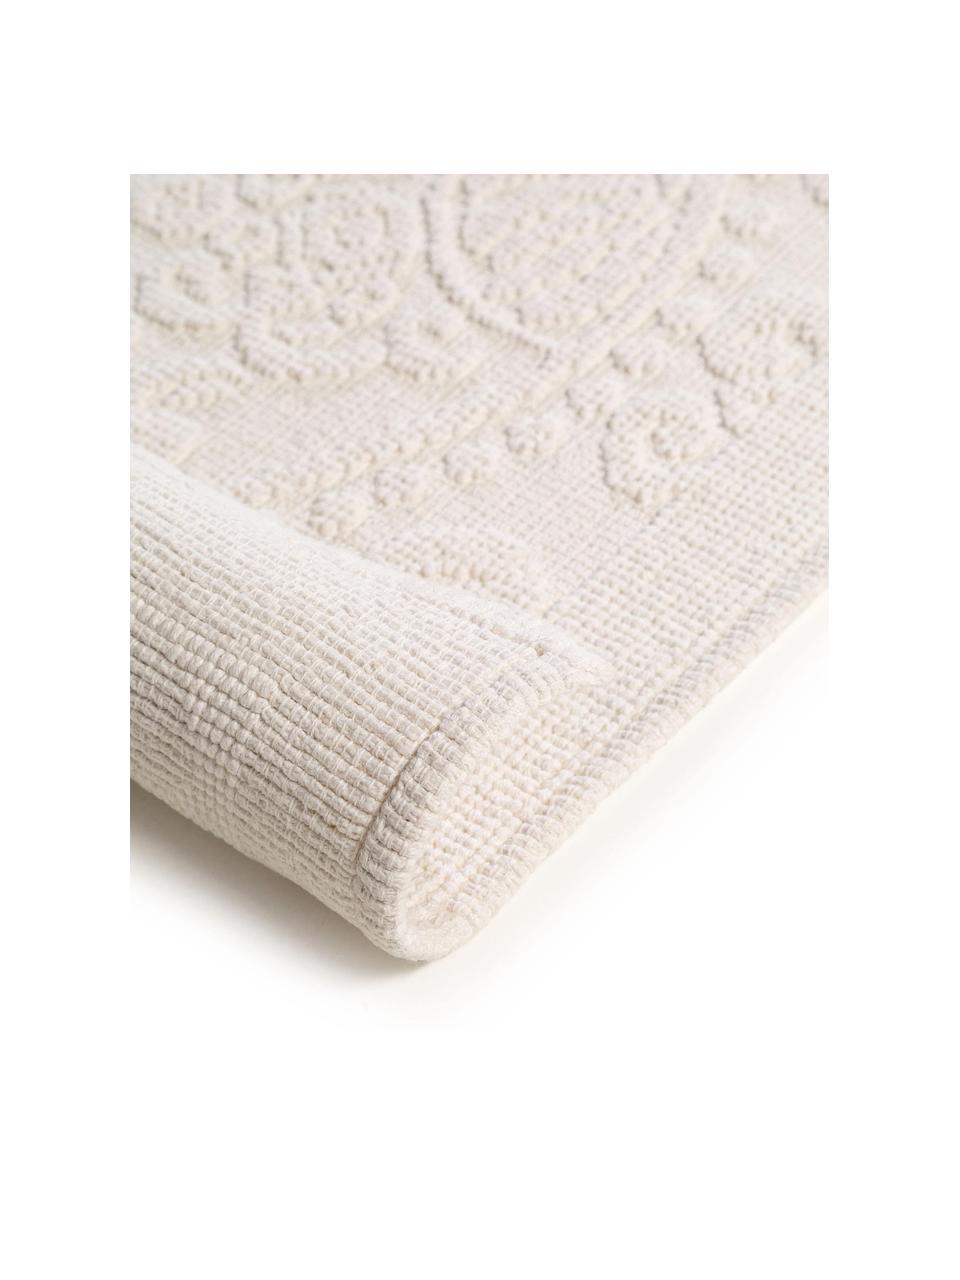 Tappetino bagno con motivo floreale Kaya, 100% cotone, Bianco crema, Larg. 50 x Lung. 80 cm